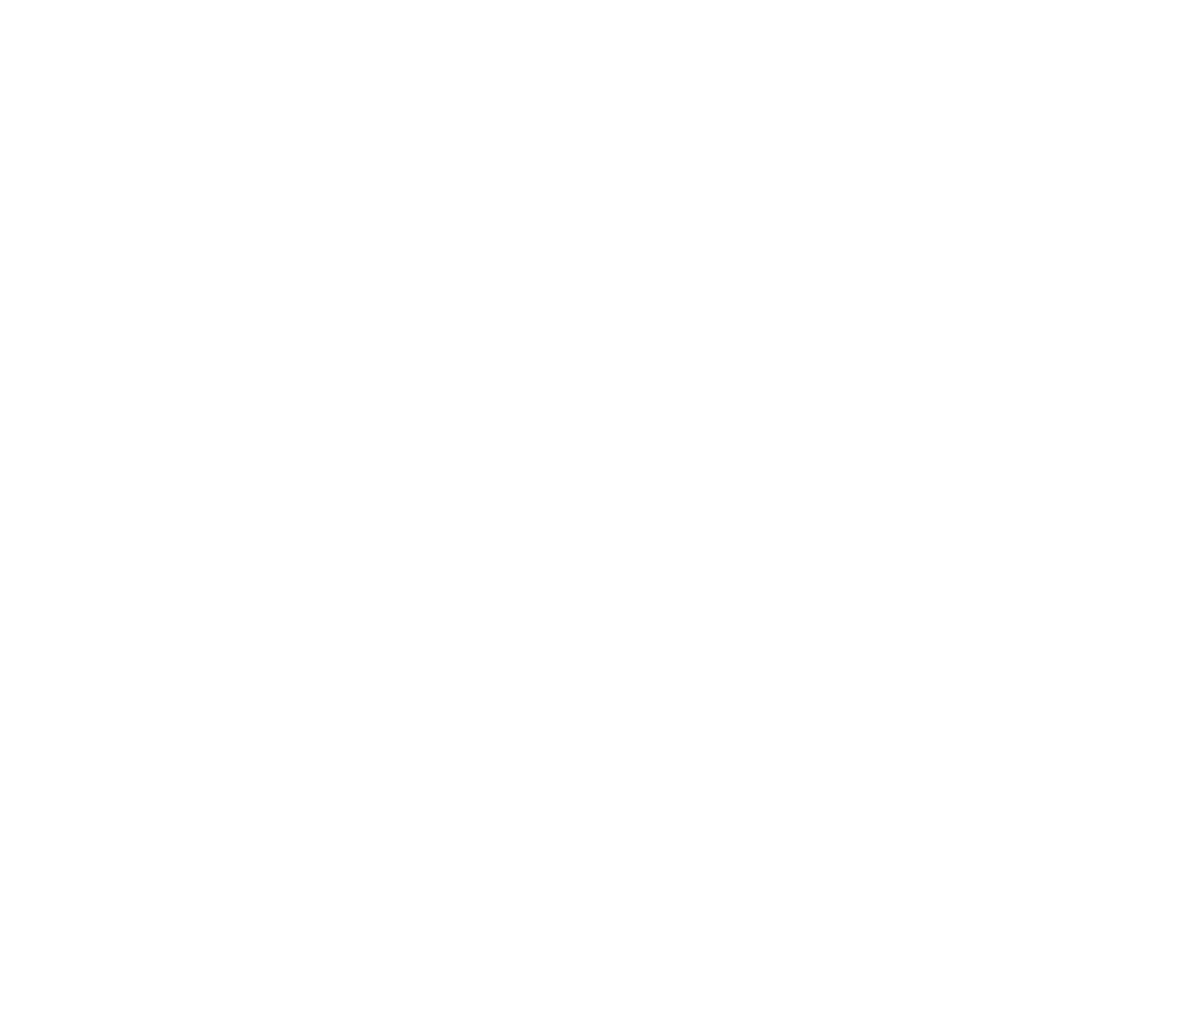 Florida Restaurant show white logo